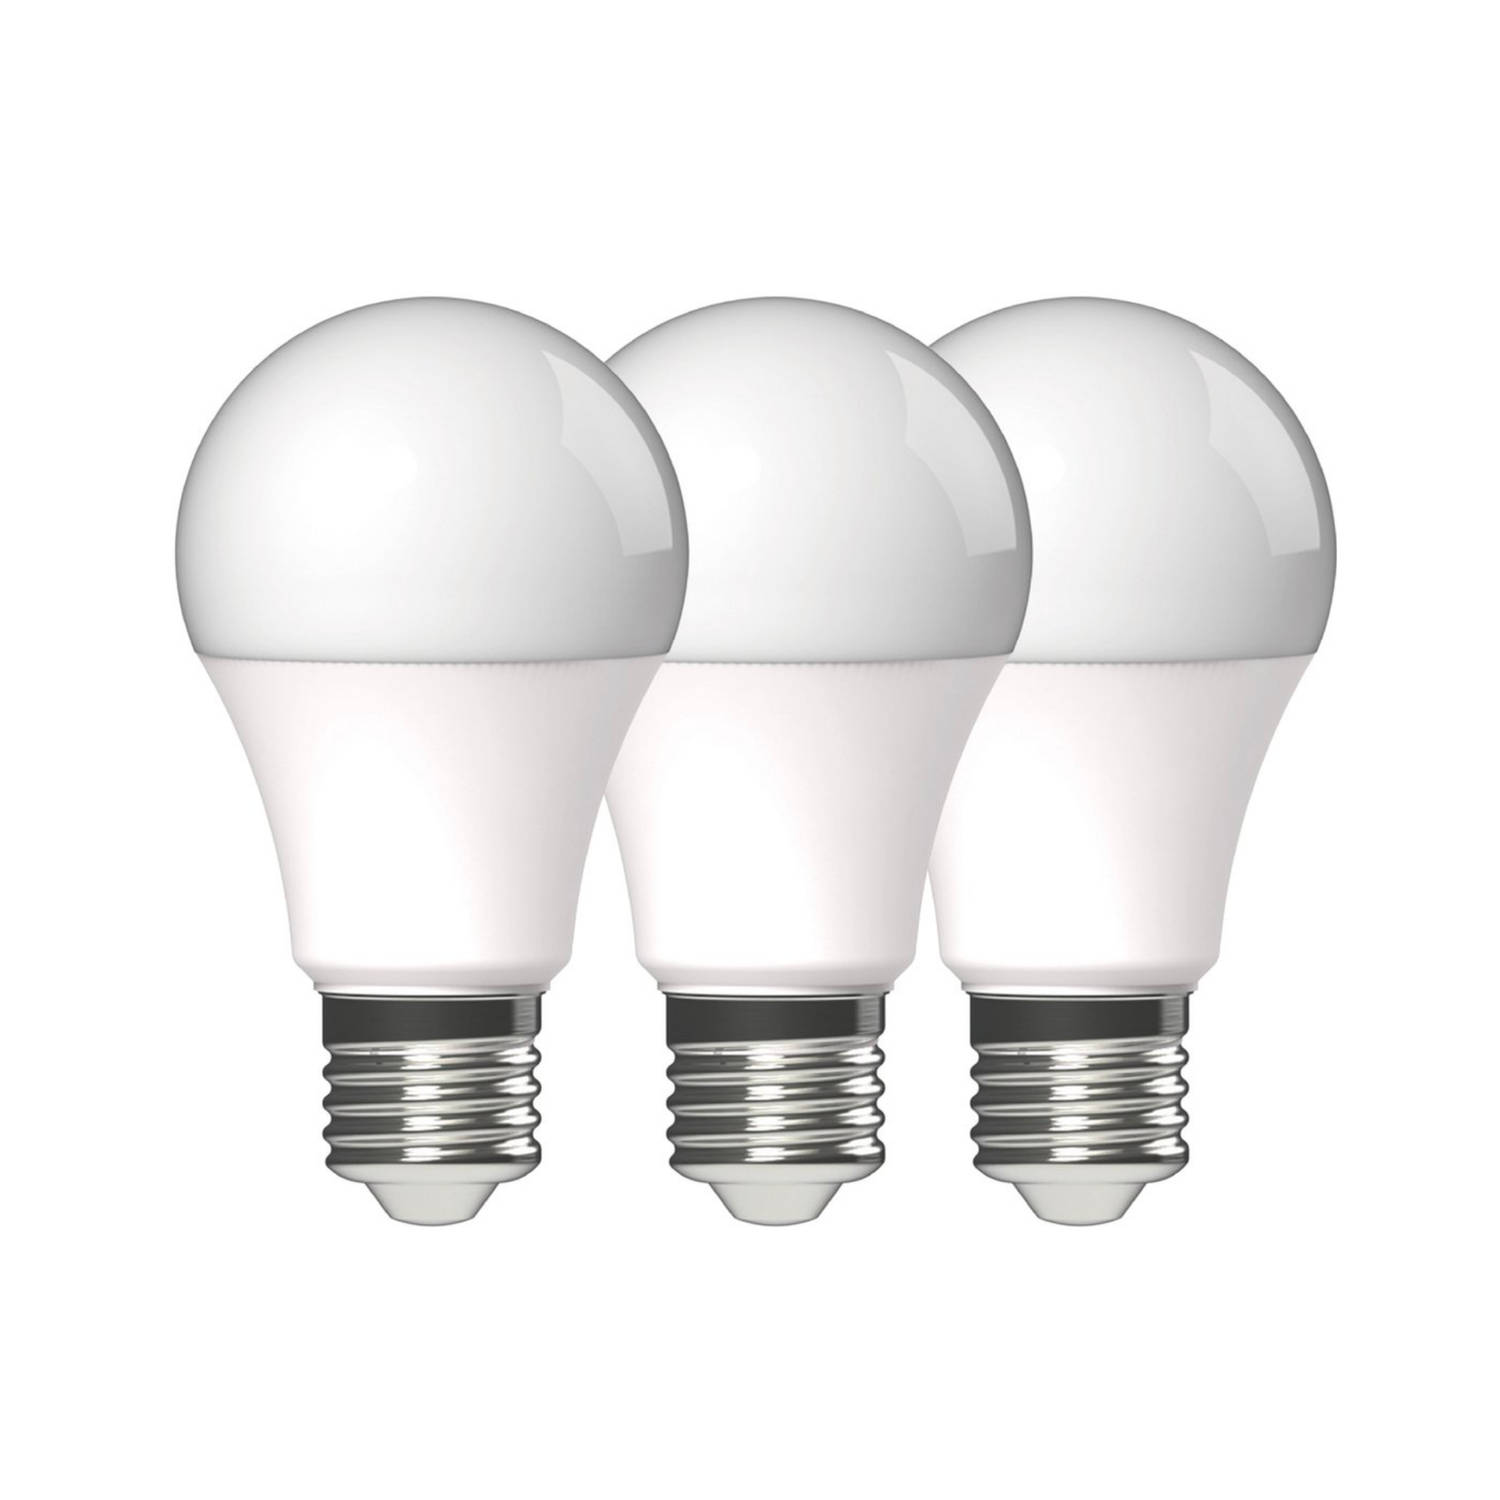 Proventa Super++ Led Lamp E27 - 17w/200w - 2400 Lm - Daglicht 6500k - 3 Ledlampen